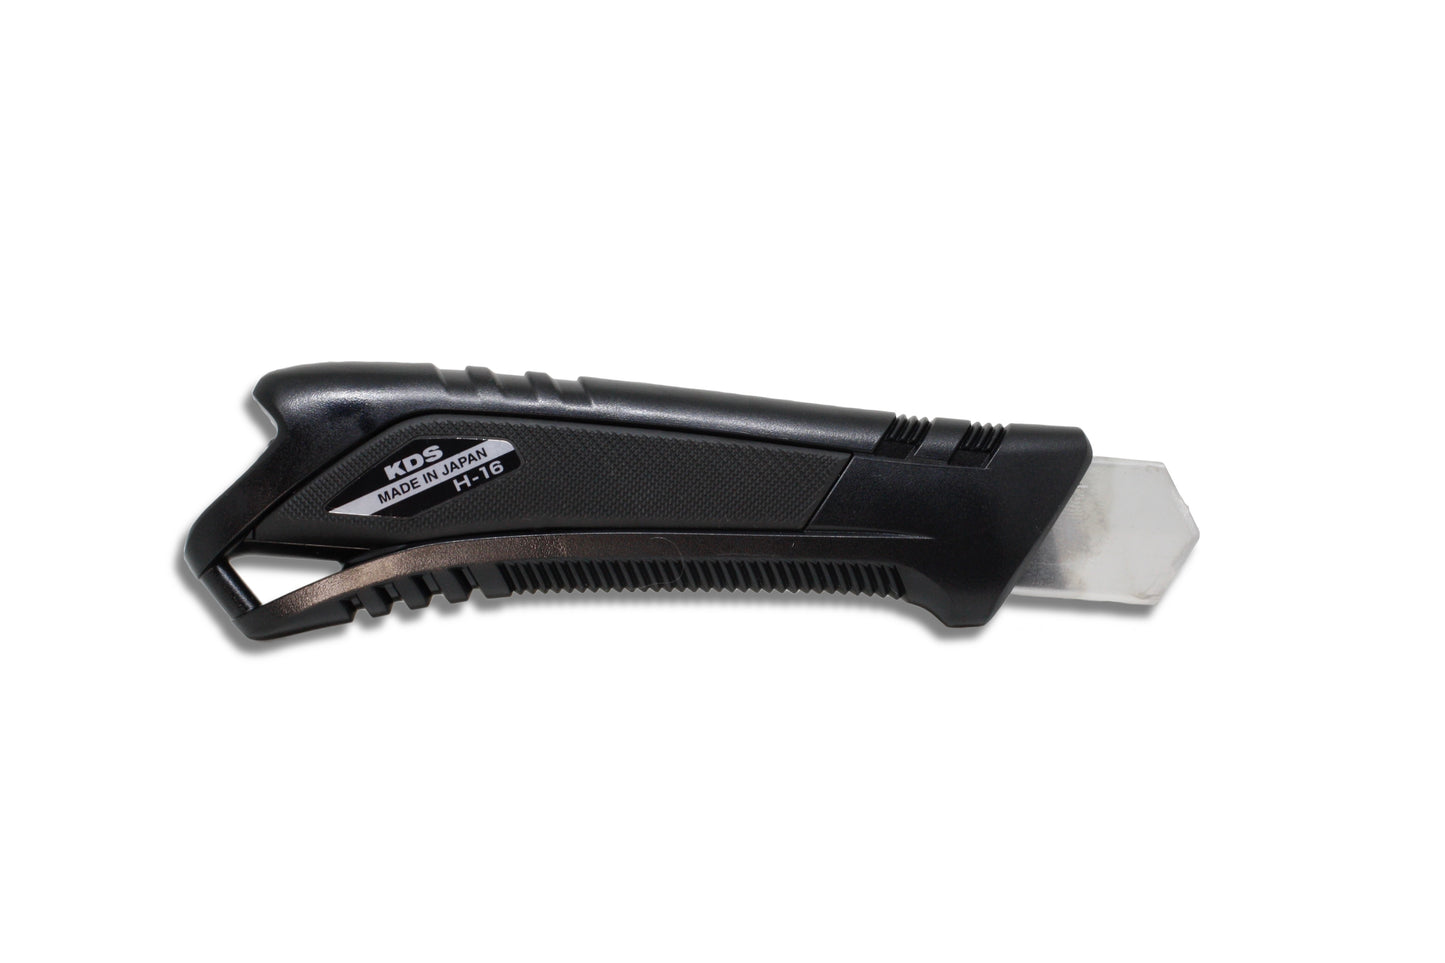 Simple back view of Tradegear Online's KDS 25mm Knife